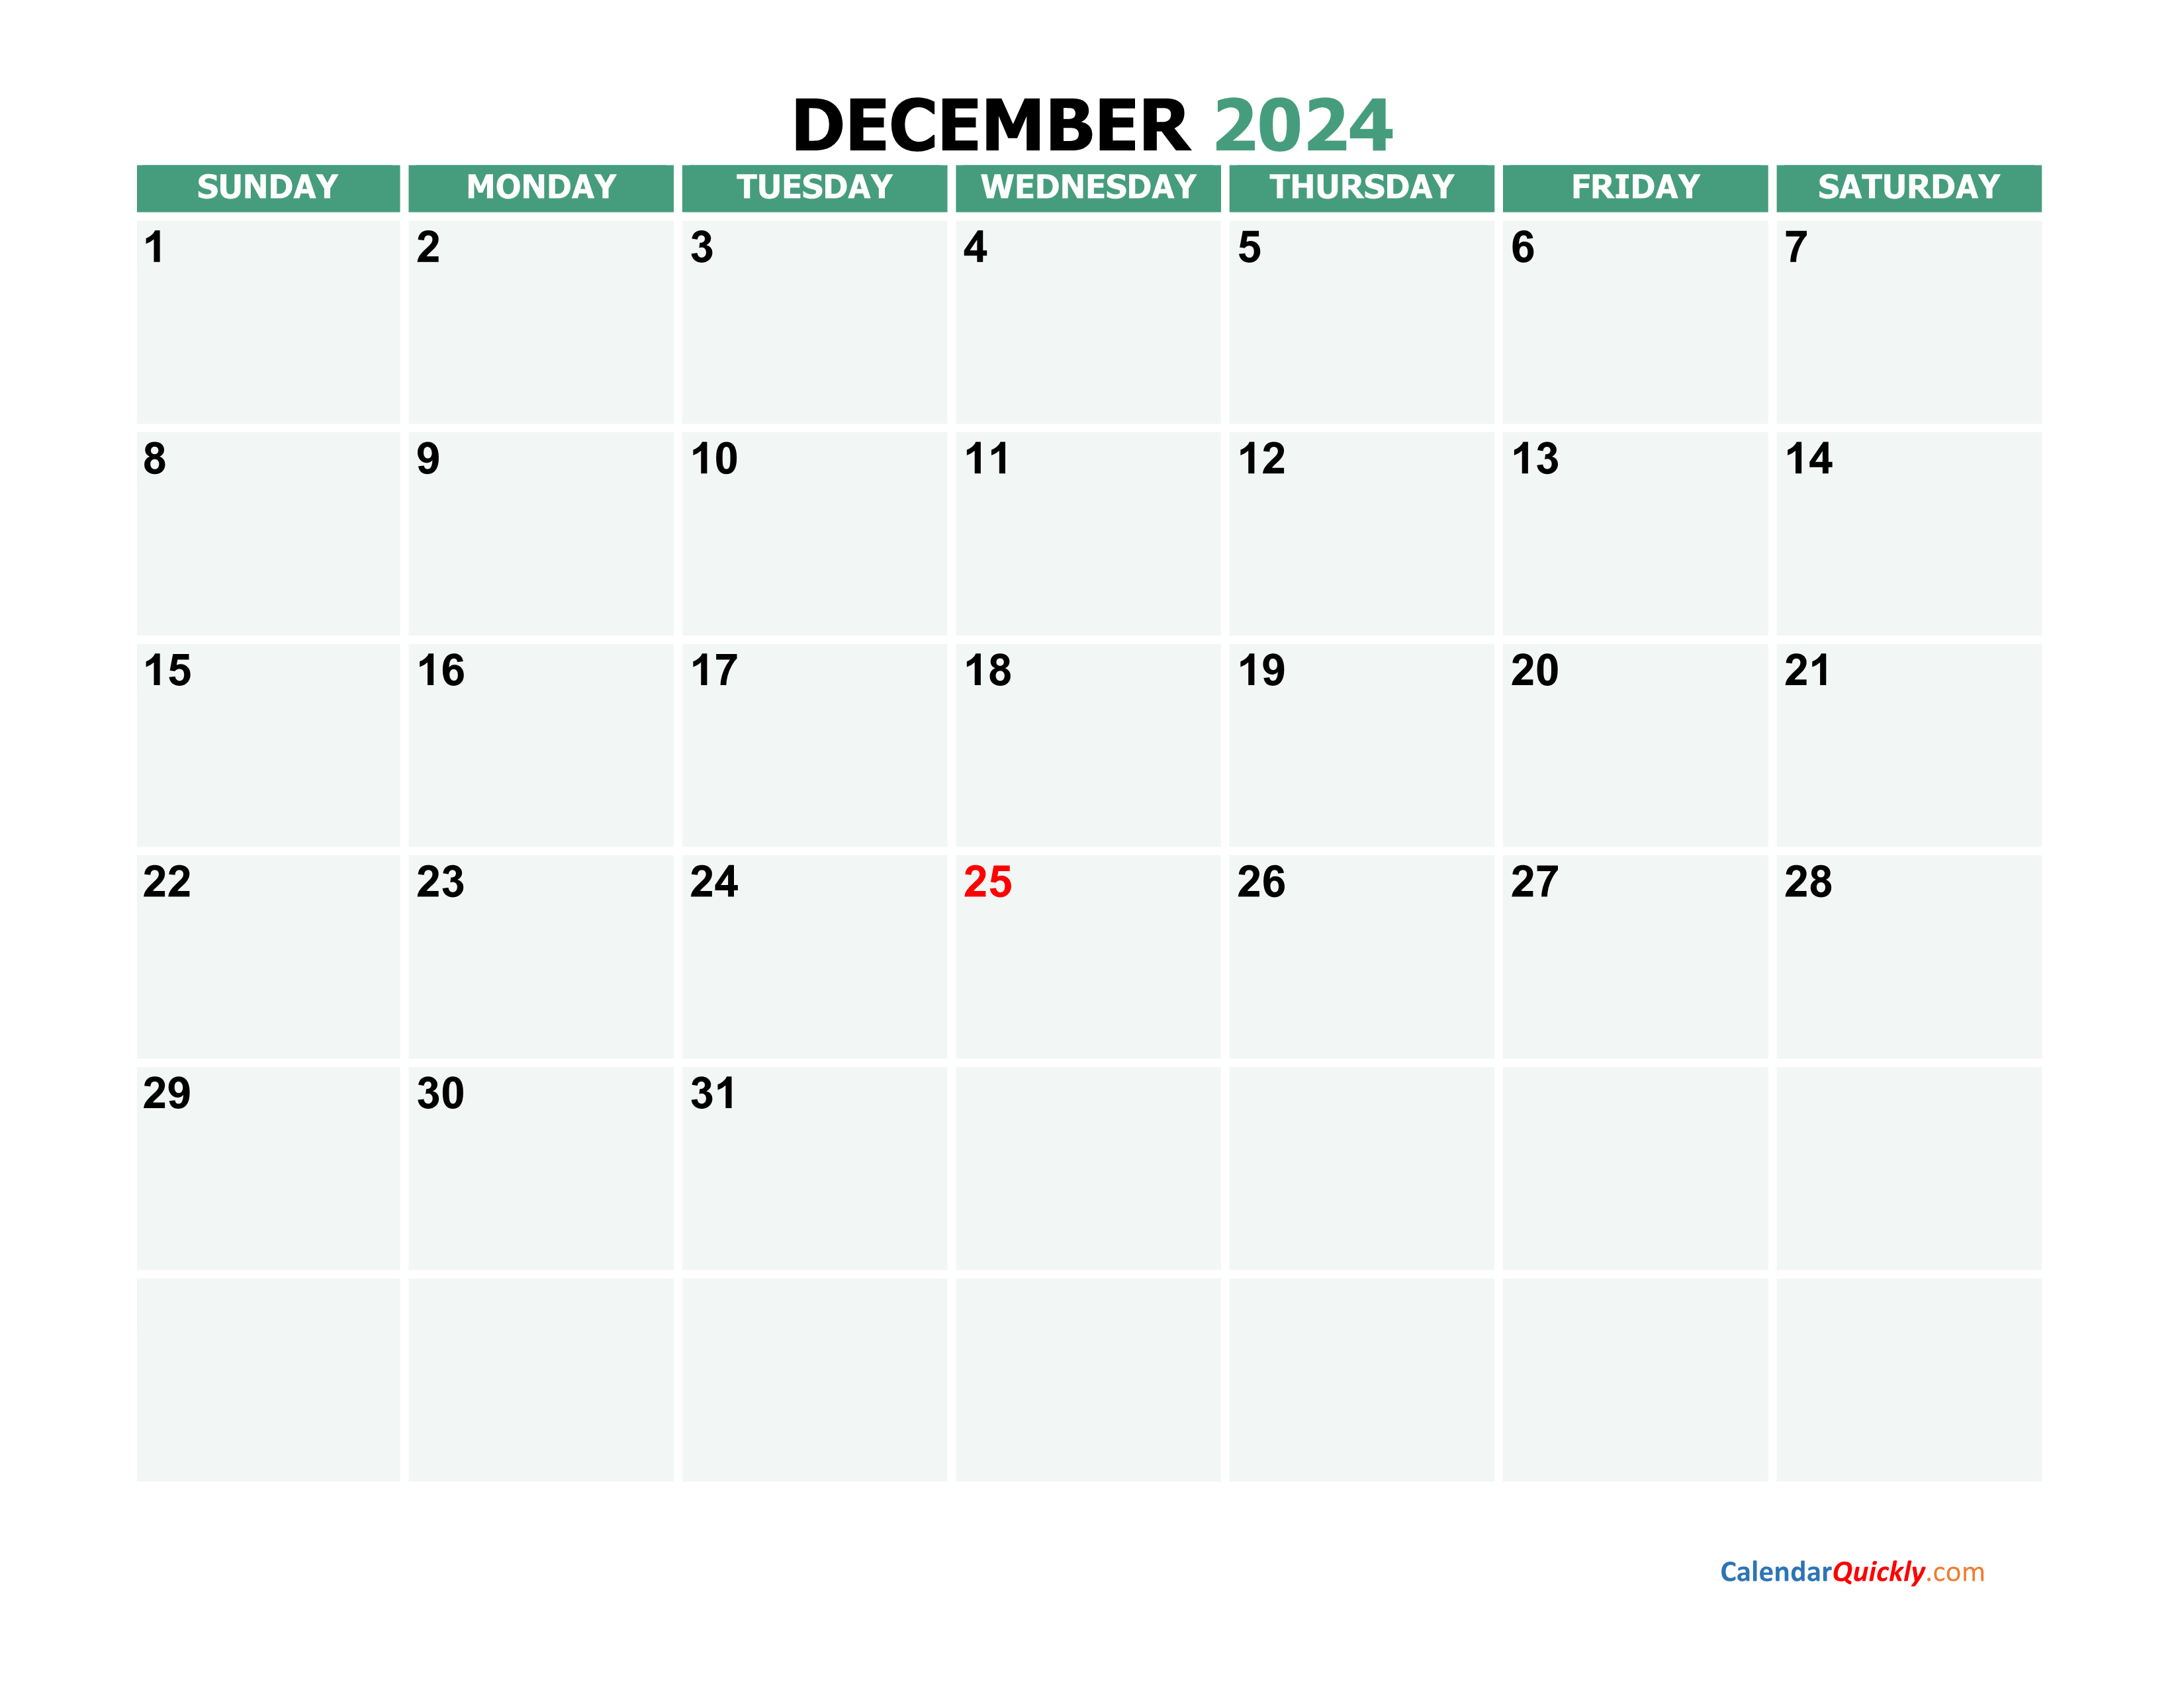 December 2024 Calendars | Calendar Quickly